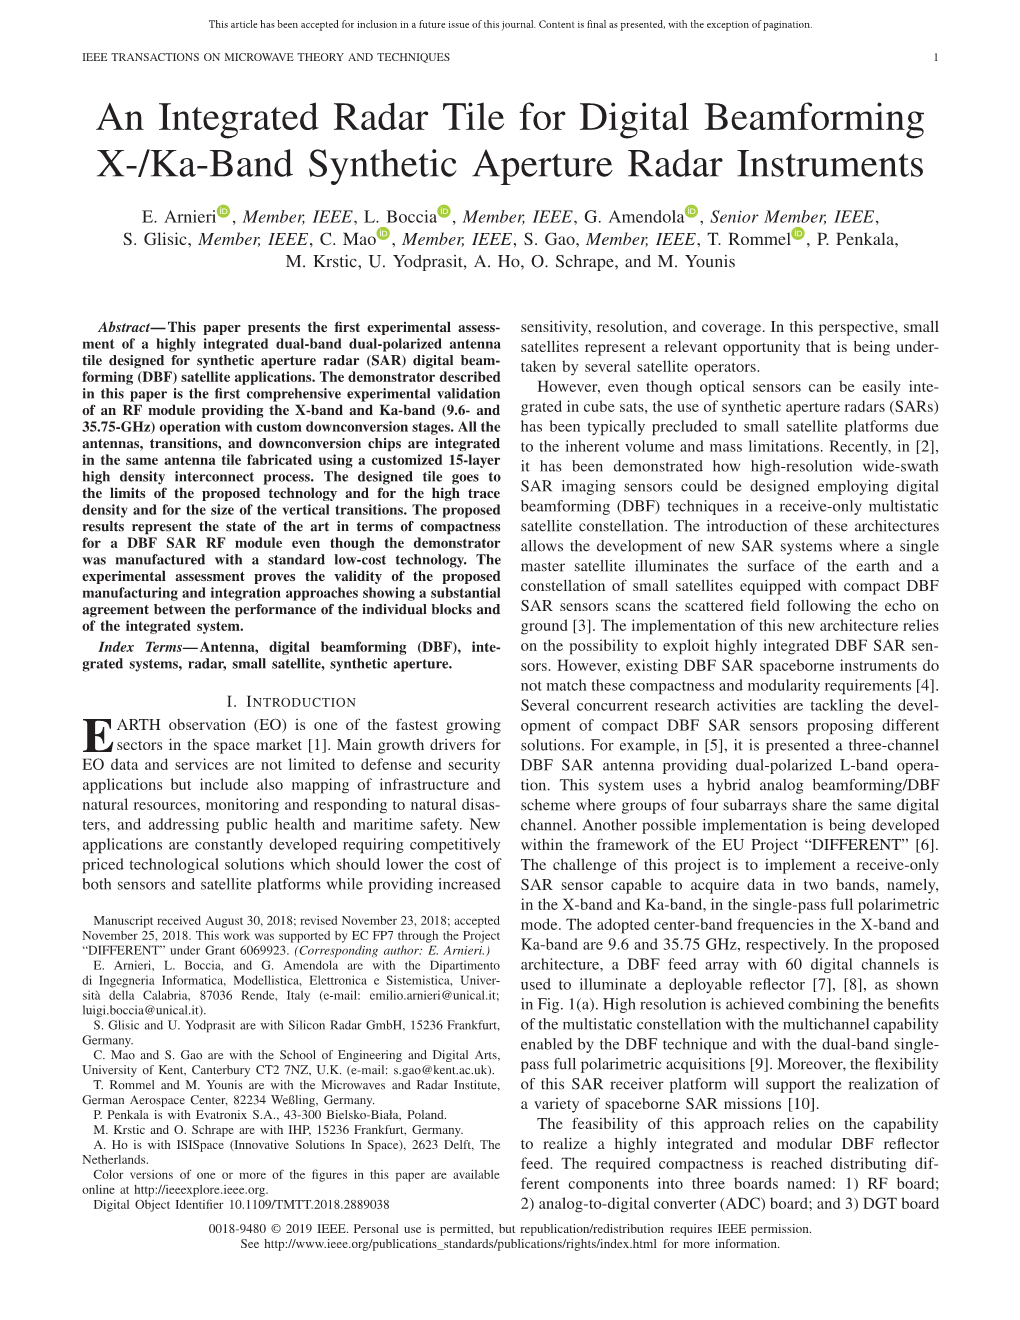 An Integrated Radar Tile for Digital Beamforming X-/Ka-Band Synthetic Aperture Radar Instruments